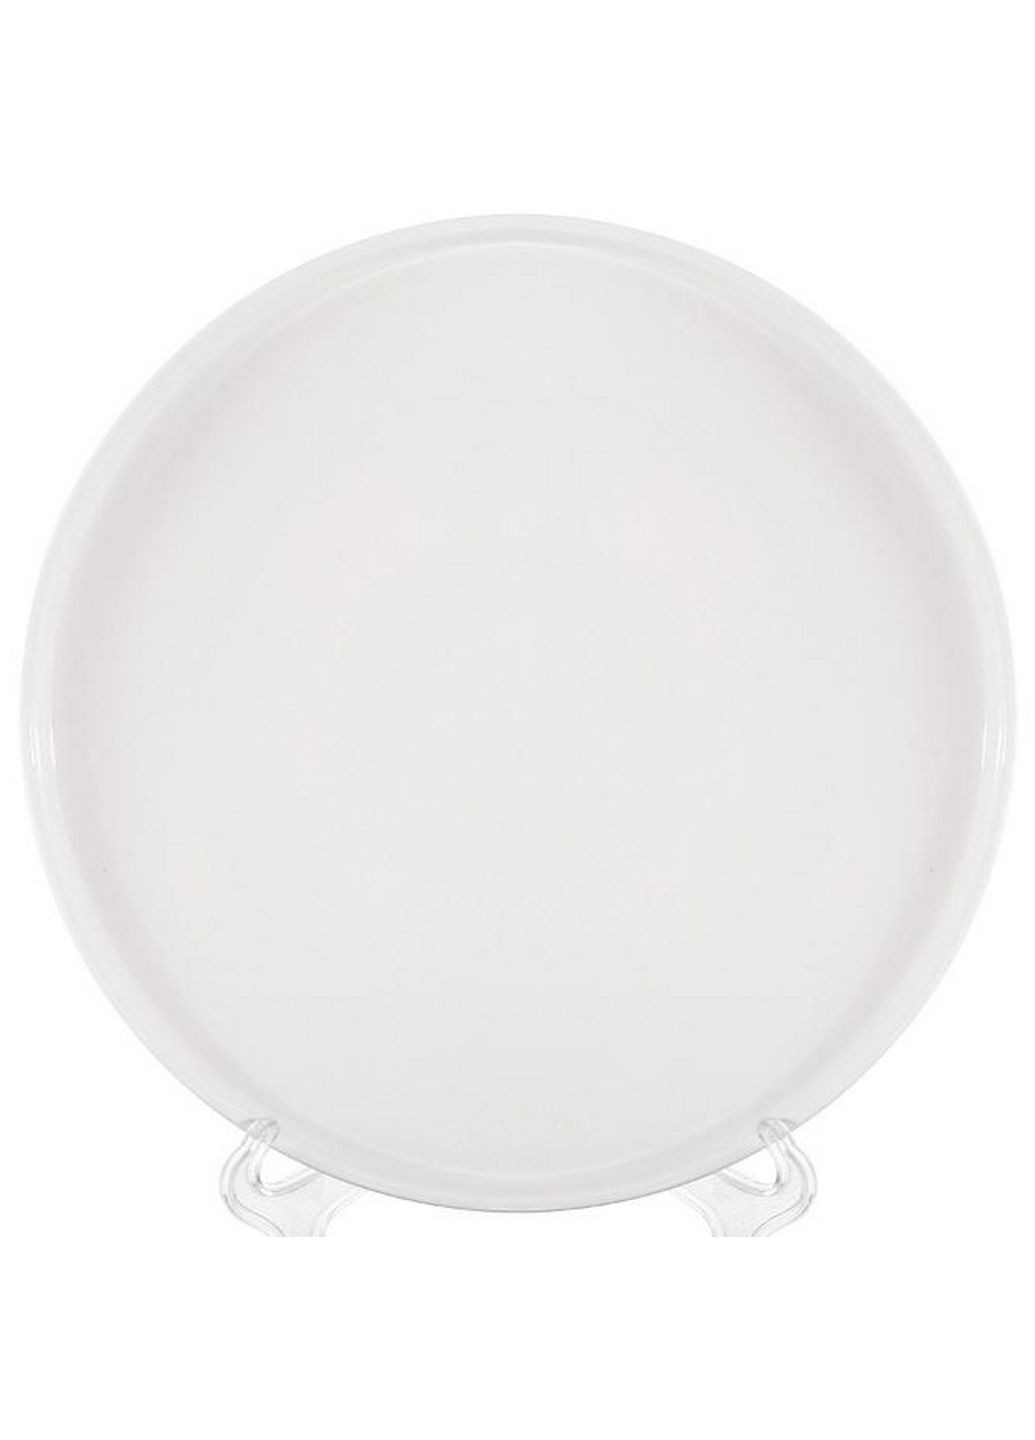 Тарілка обідня white city, набір 2 тарілки, порцеляна Bona (282585966)